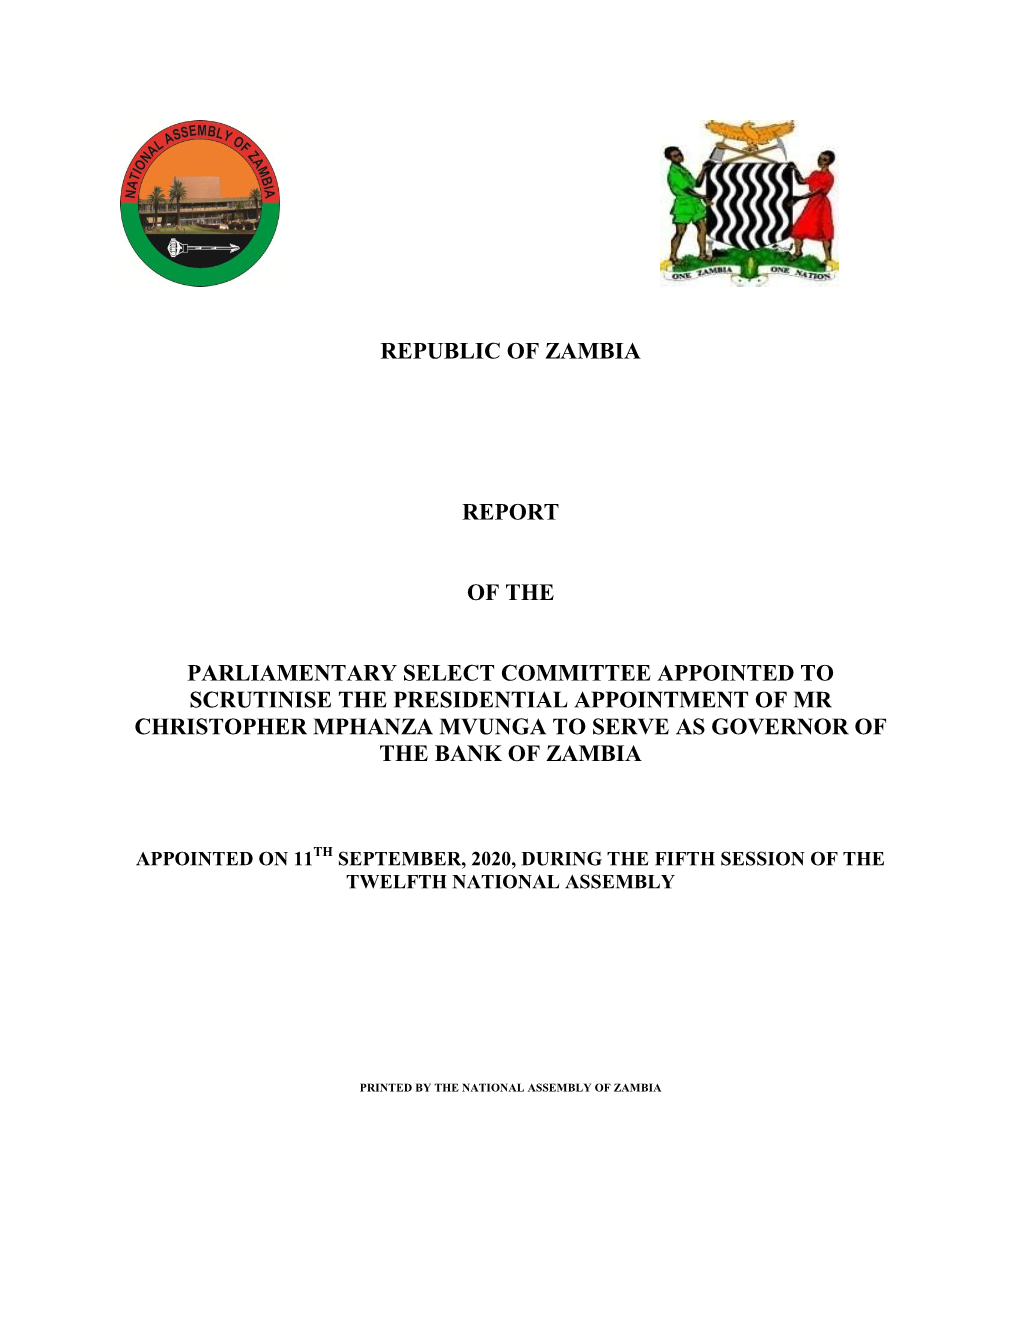 Report of the Boz Governor Parliamentary Select